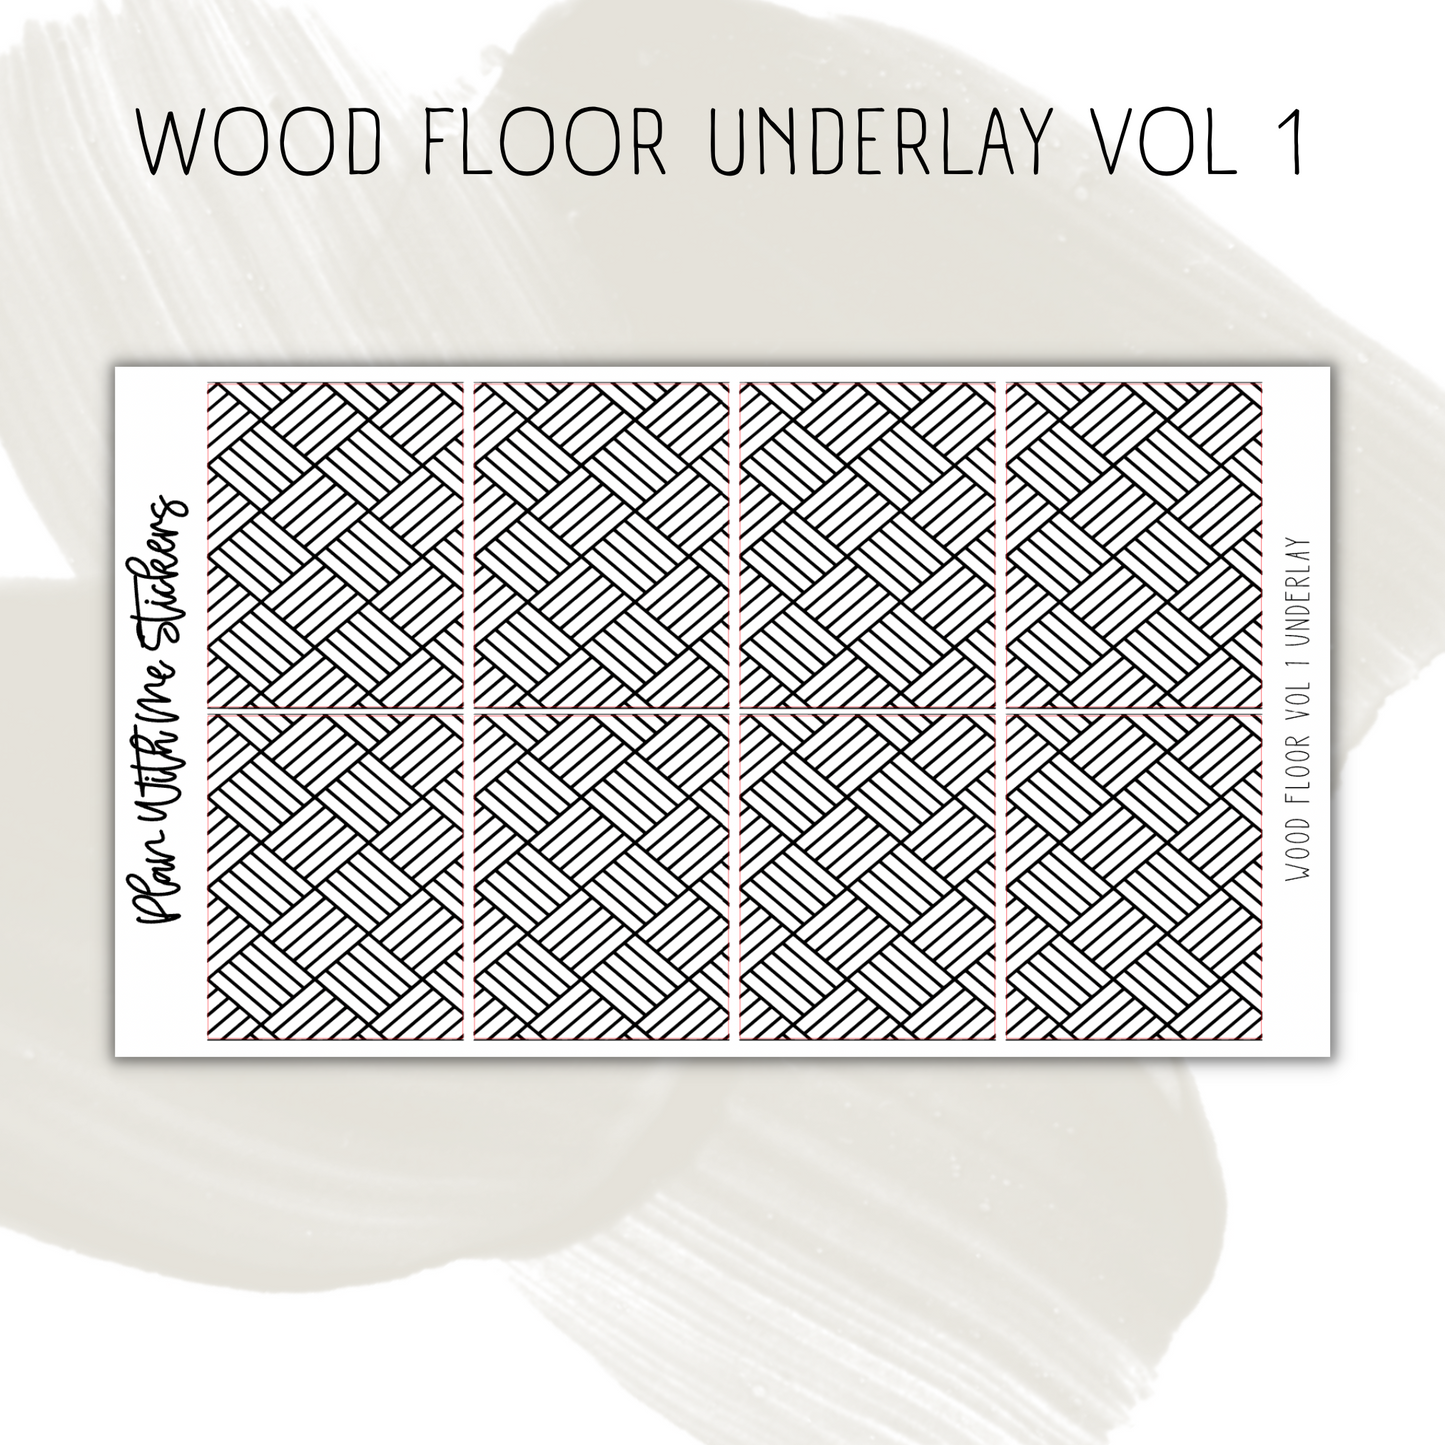 Wood Floor Underlay Vol 1